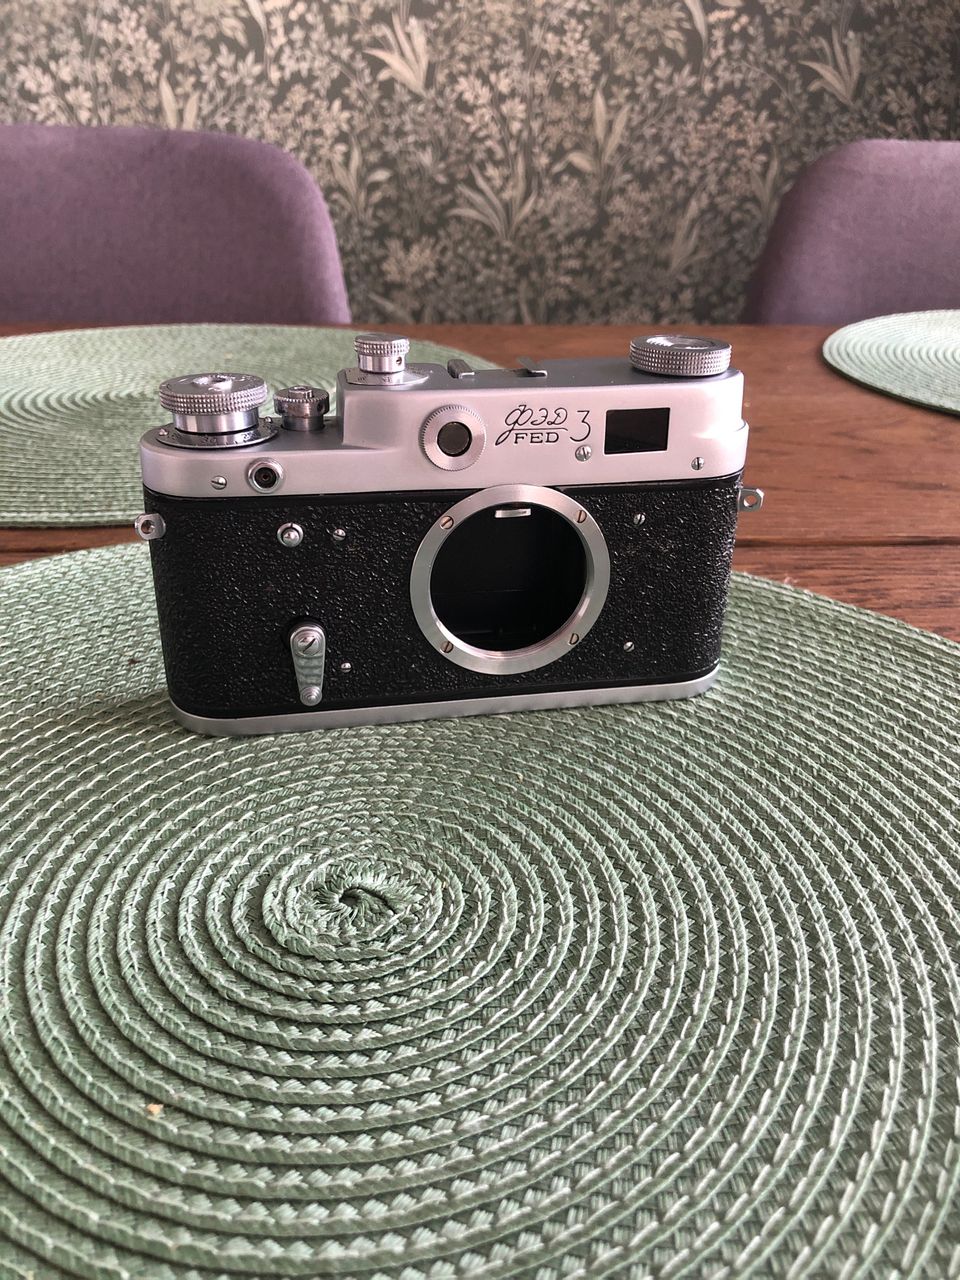 Fed 3 kamera